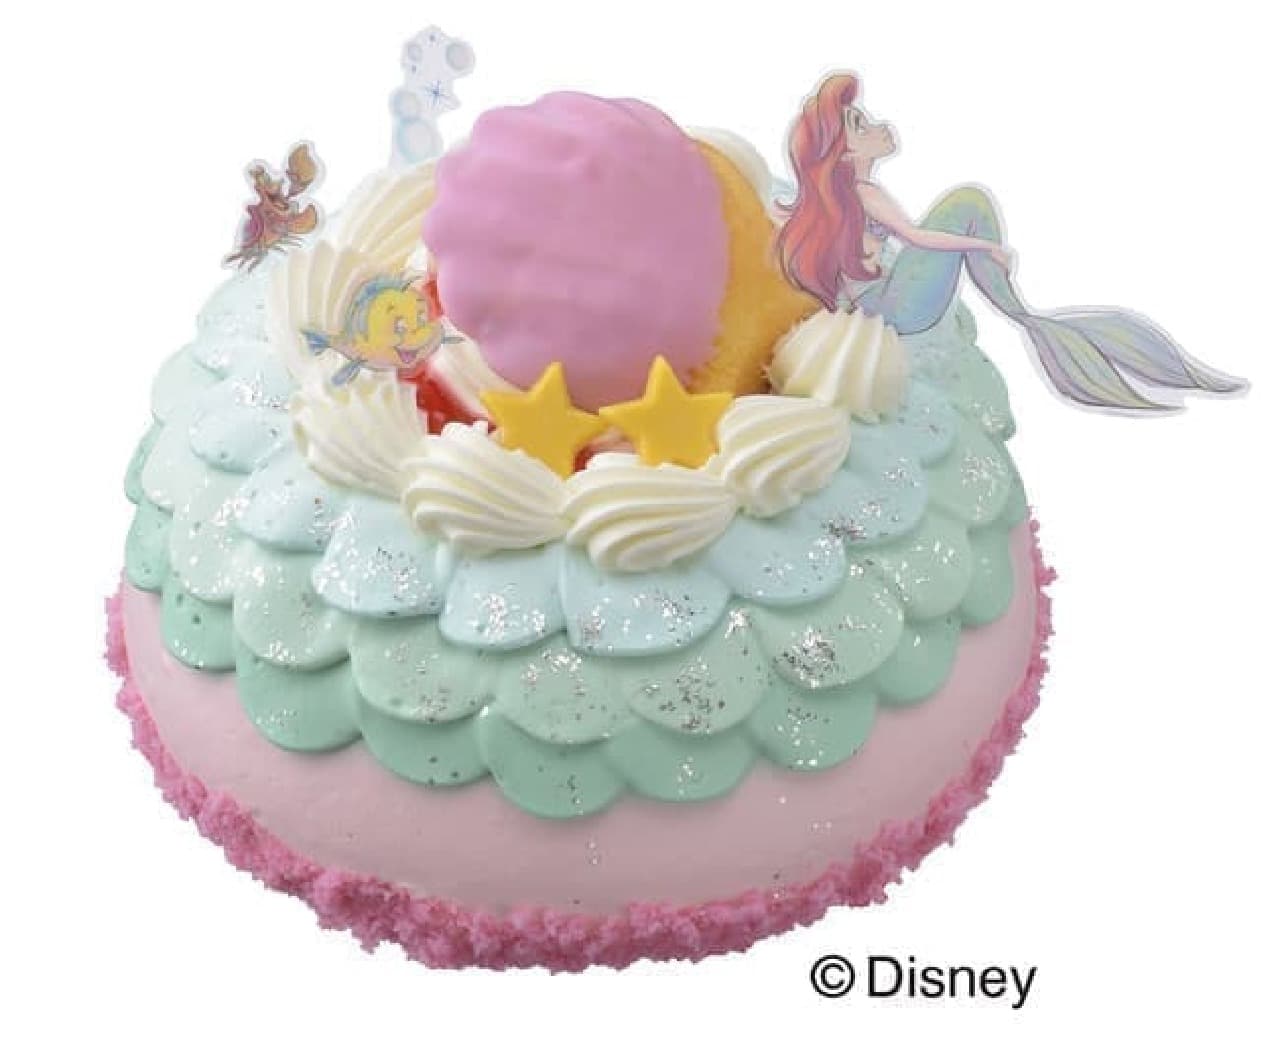 Ginza Cozy Corner Disney Cake Is Too Cute Motif Such As Ariel Rapunzel Belle Entabe